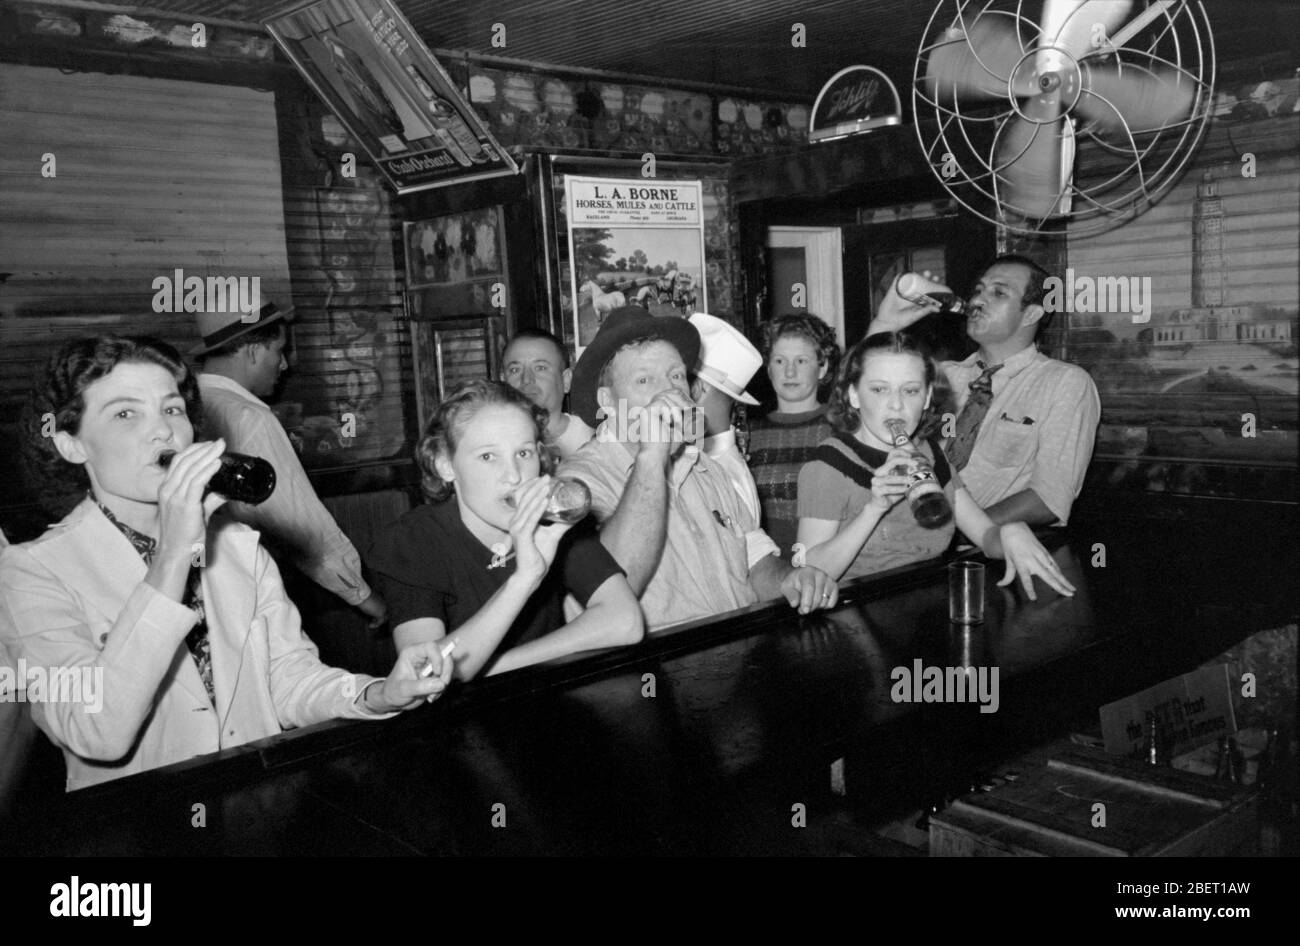 Great Depression era photograph showing patrons at a bar in Louisiana. Stock Photo